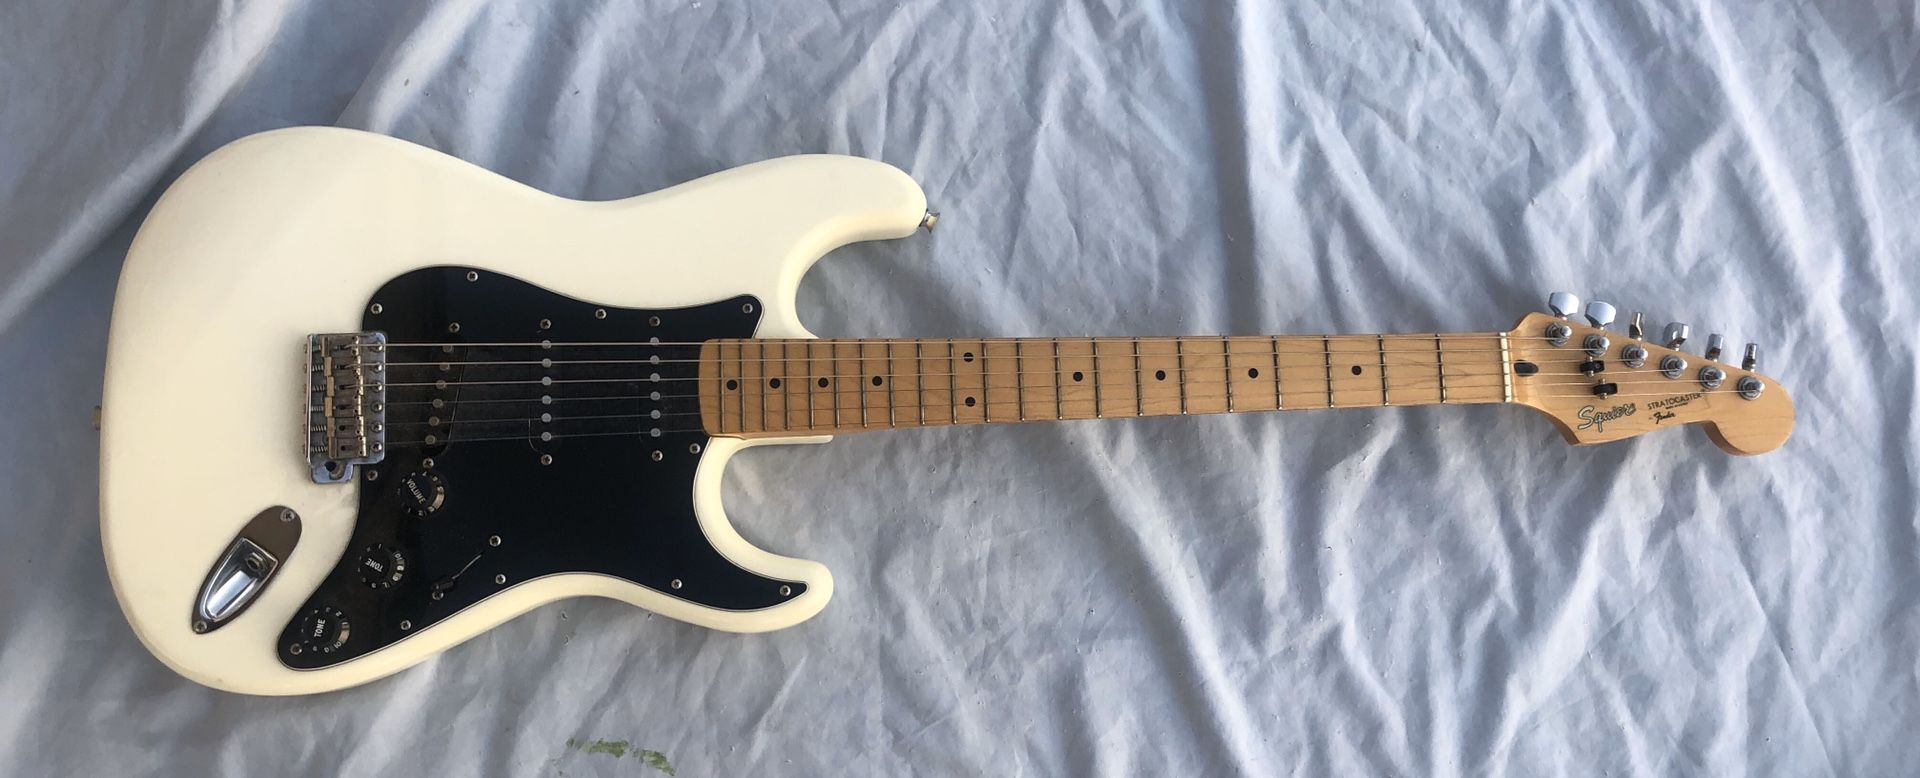 80’s squier Stratocaster guitar